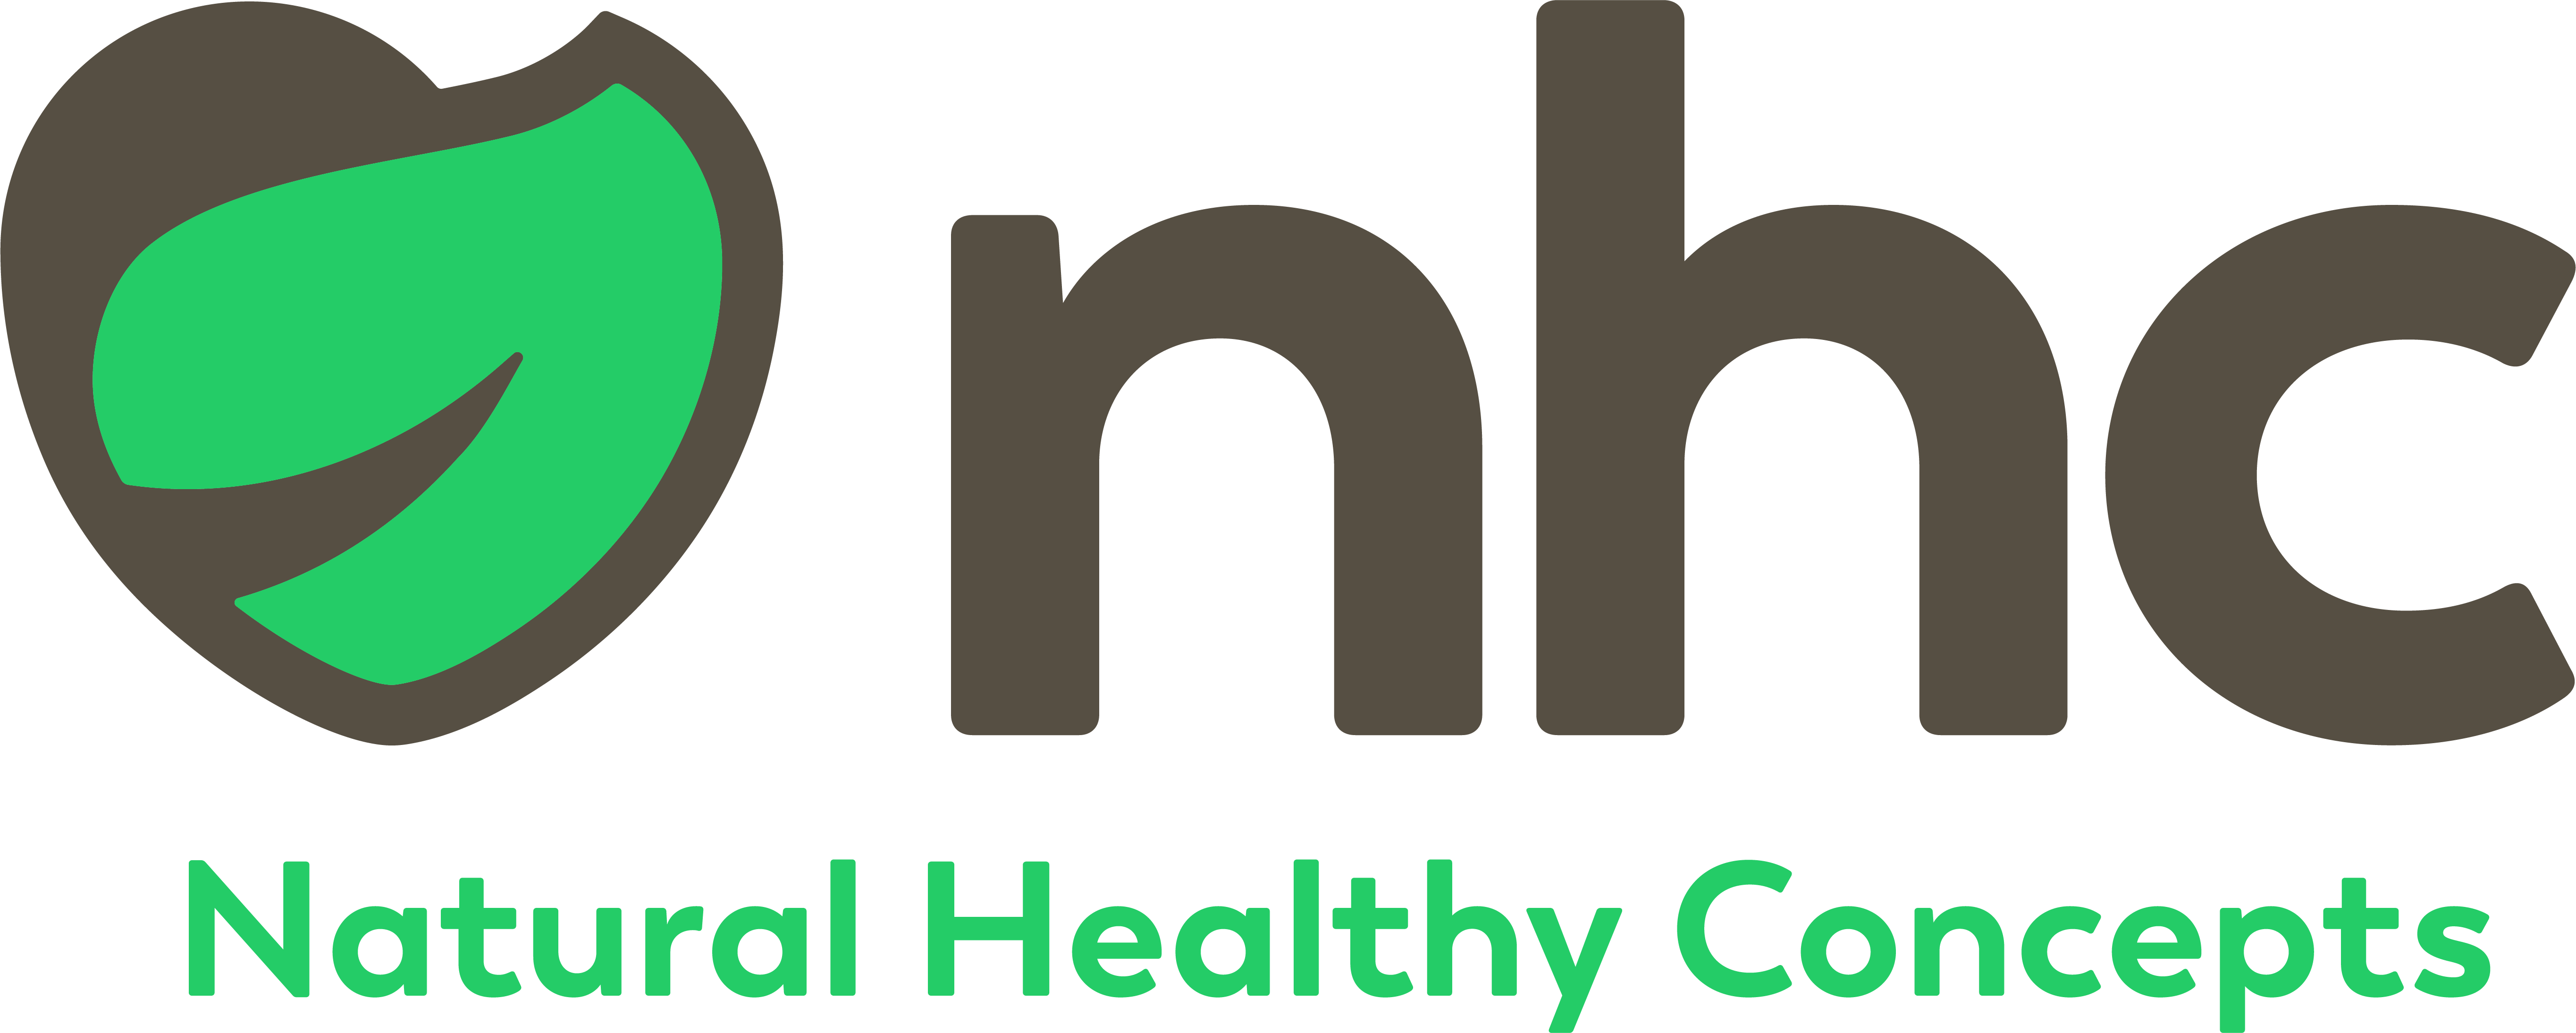 Natural Healthy Concepts
					_logo